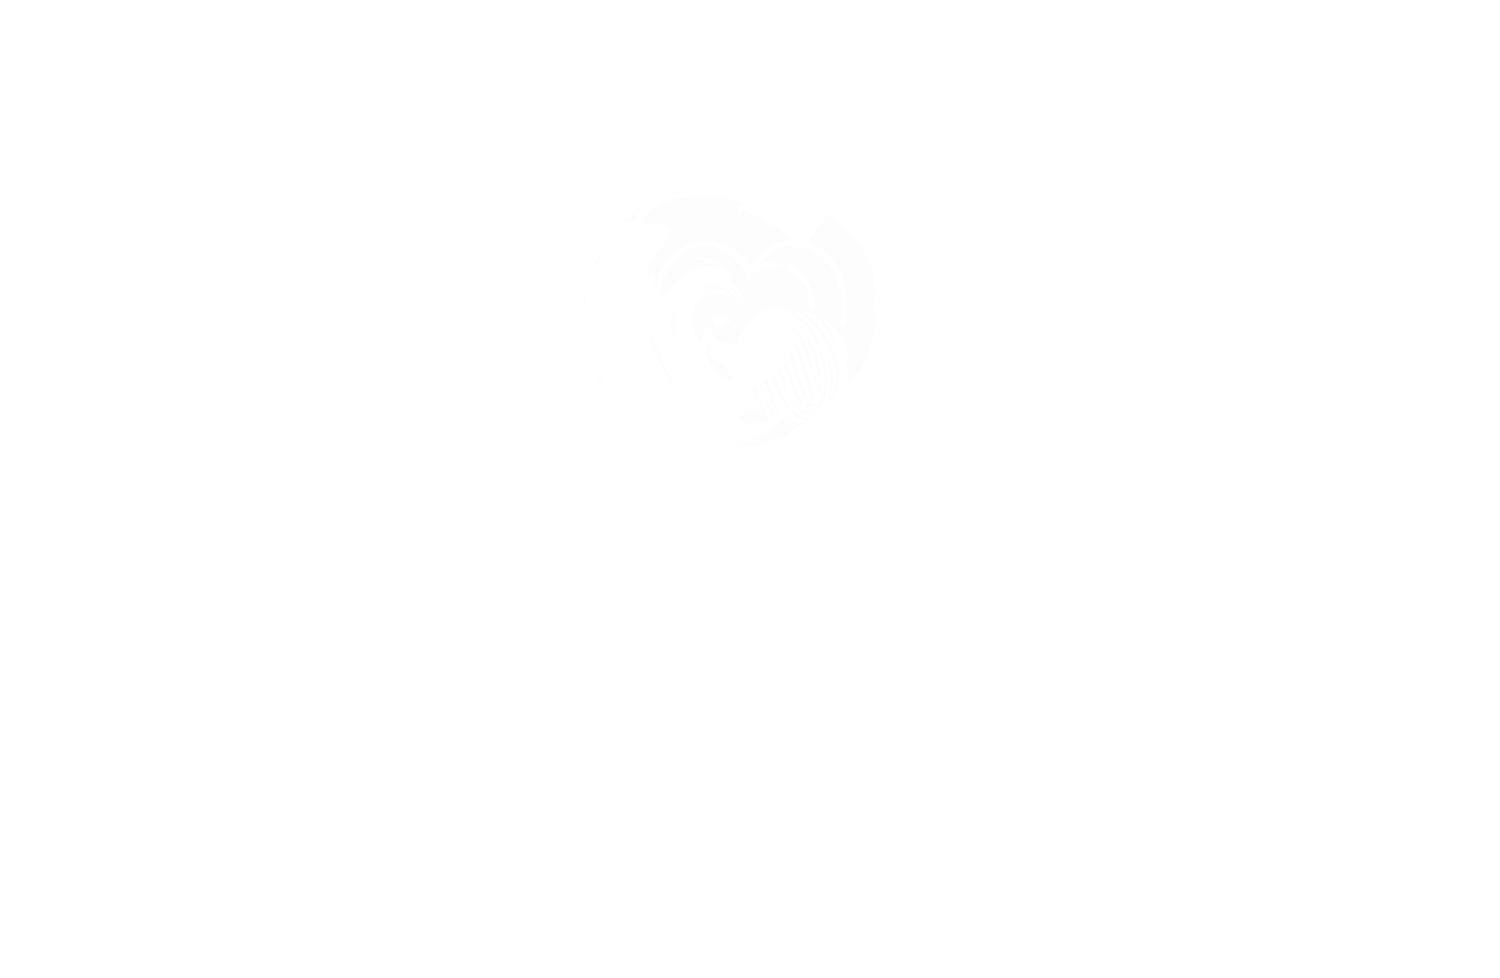 ID Essence